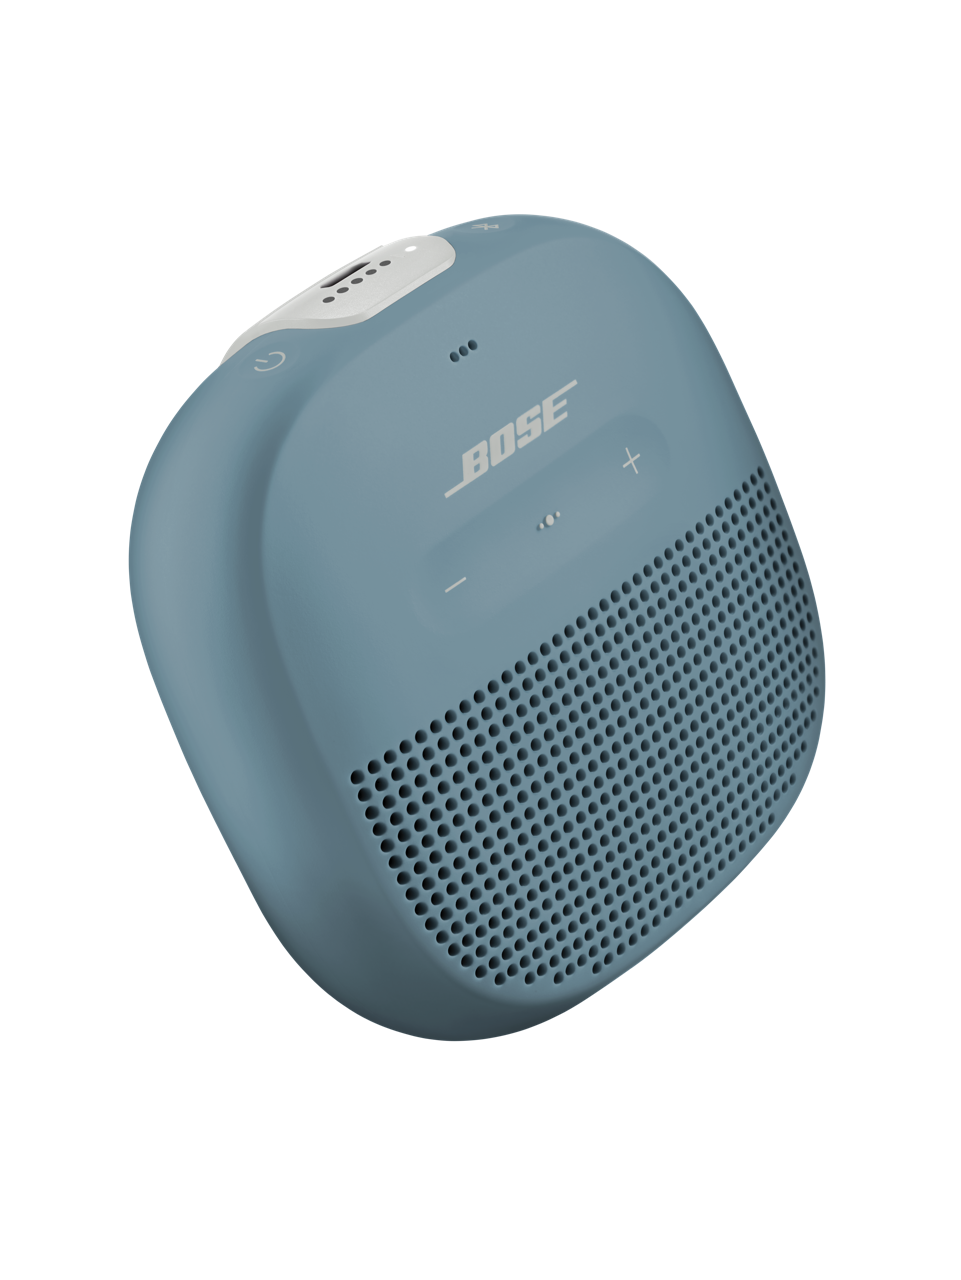 Bose Soundlink Micro Bluetooth speaker in stone blue